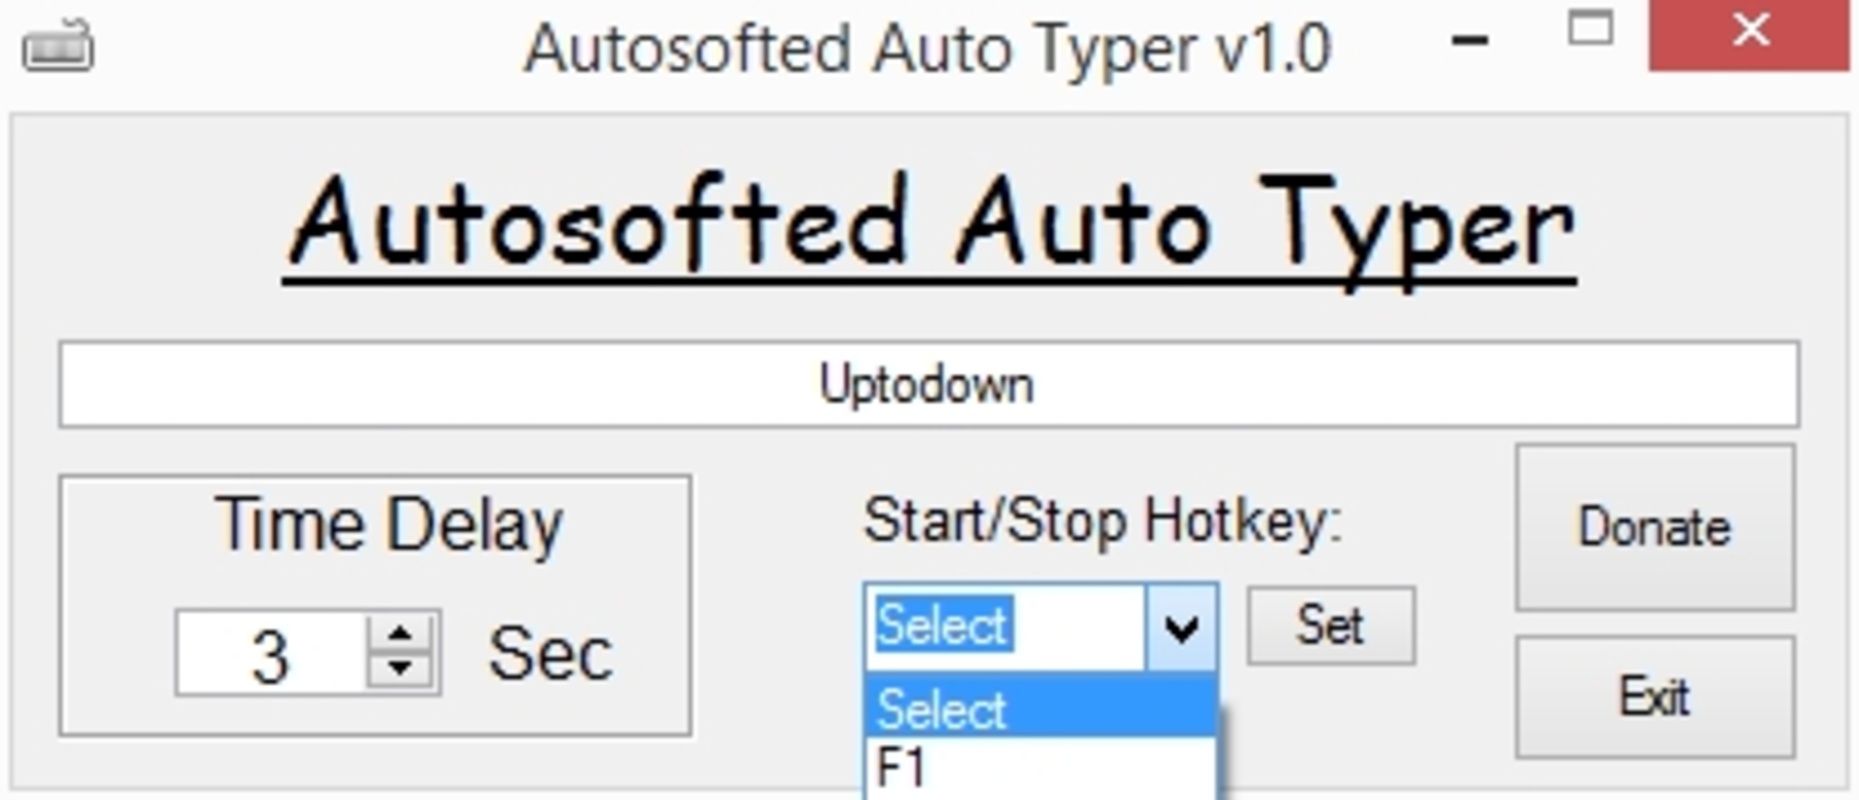 Auto Typer 34.1.1 for Windows Screenshot 1